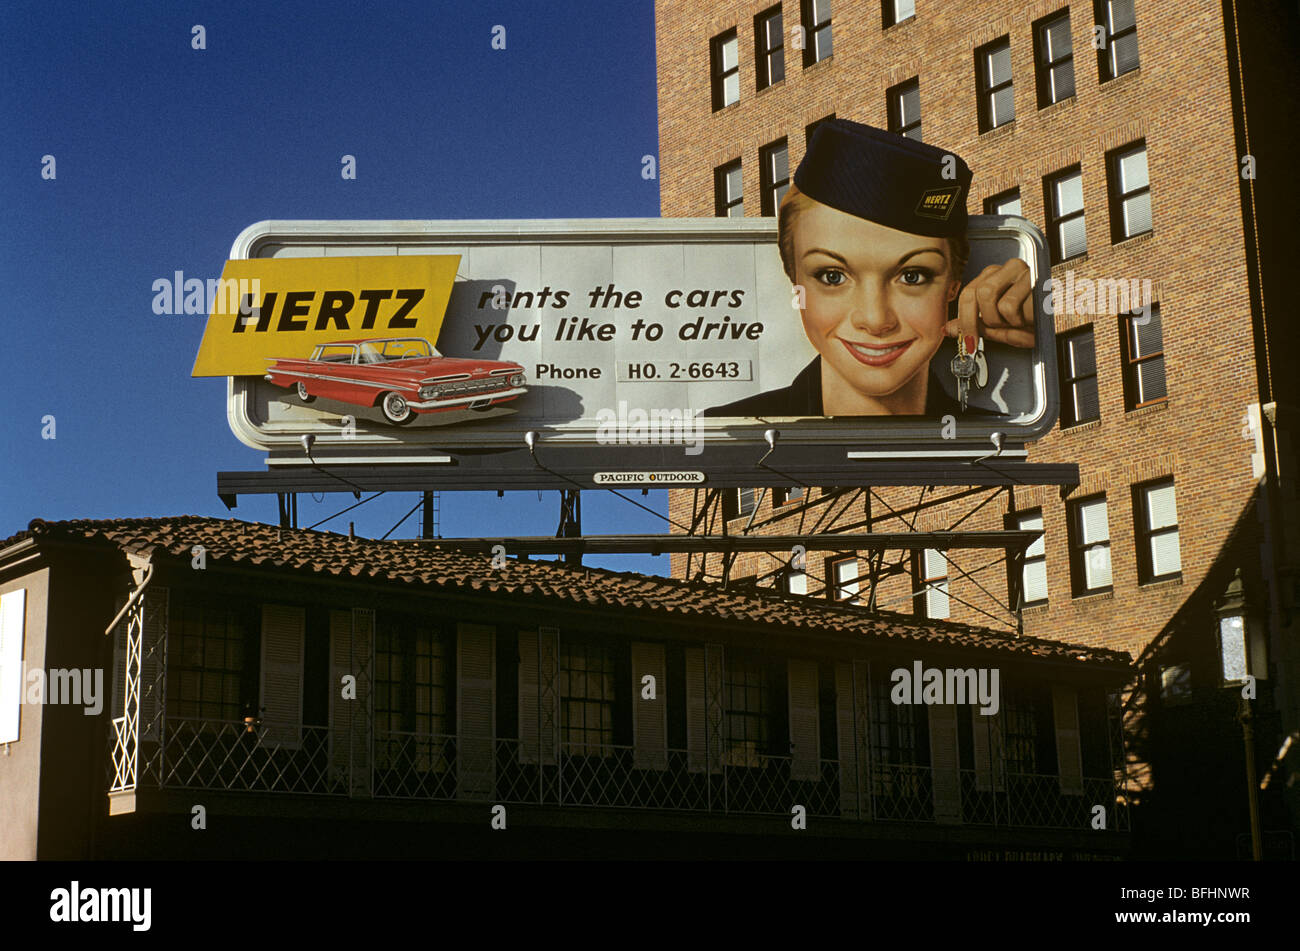 A billboard advertising Hertz rental cars in Los Angeles, CA Stock Photo